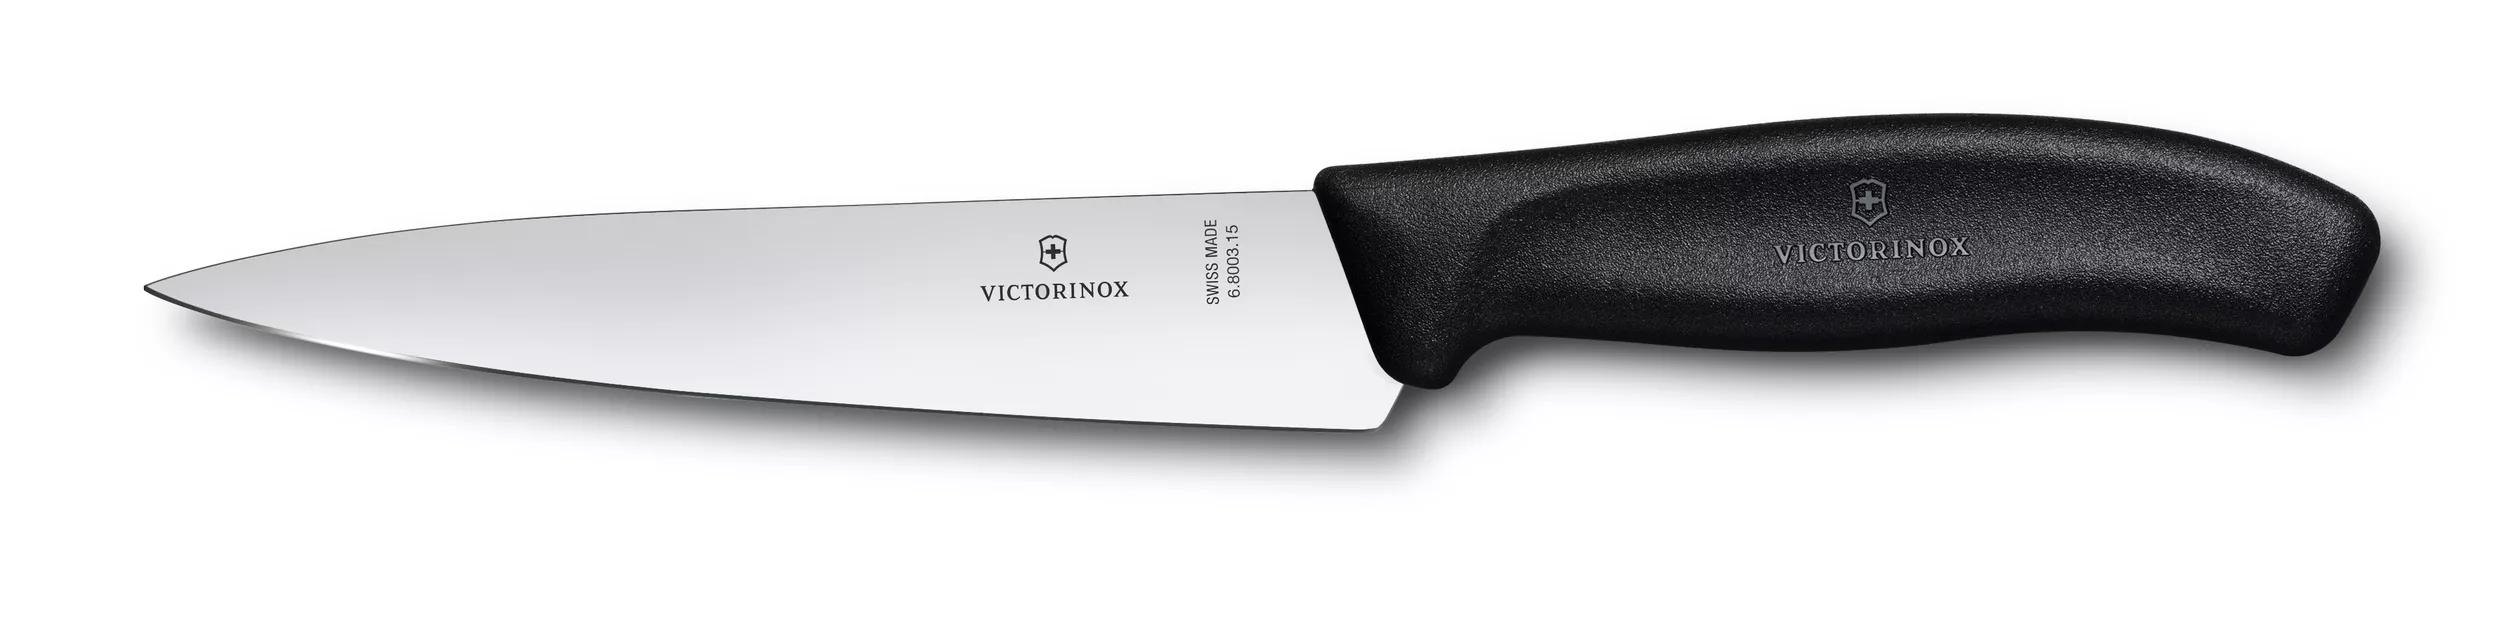 100% Genuine! VICTORINOX SWISS Made 8cm Paring & Vege Knife Black!